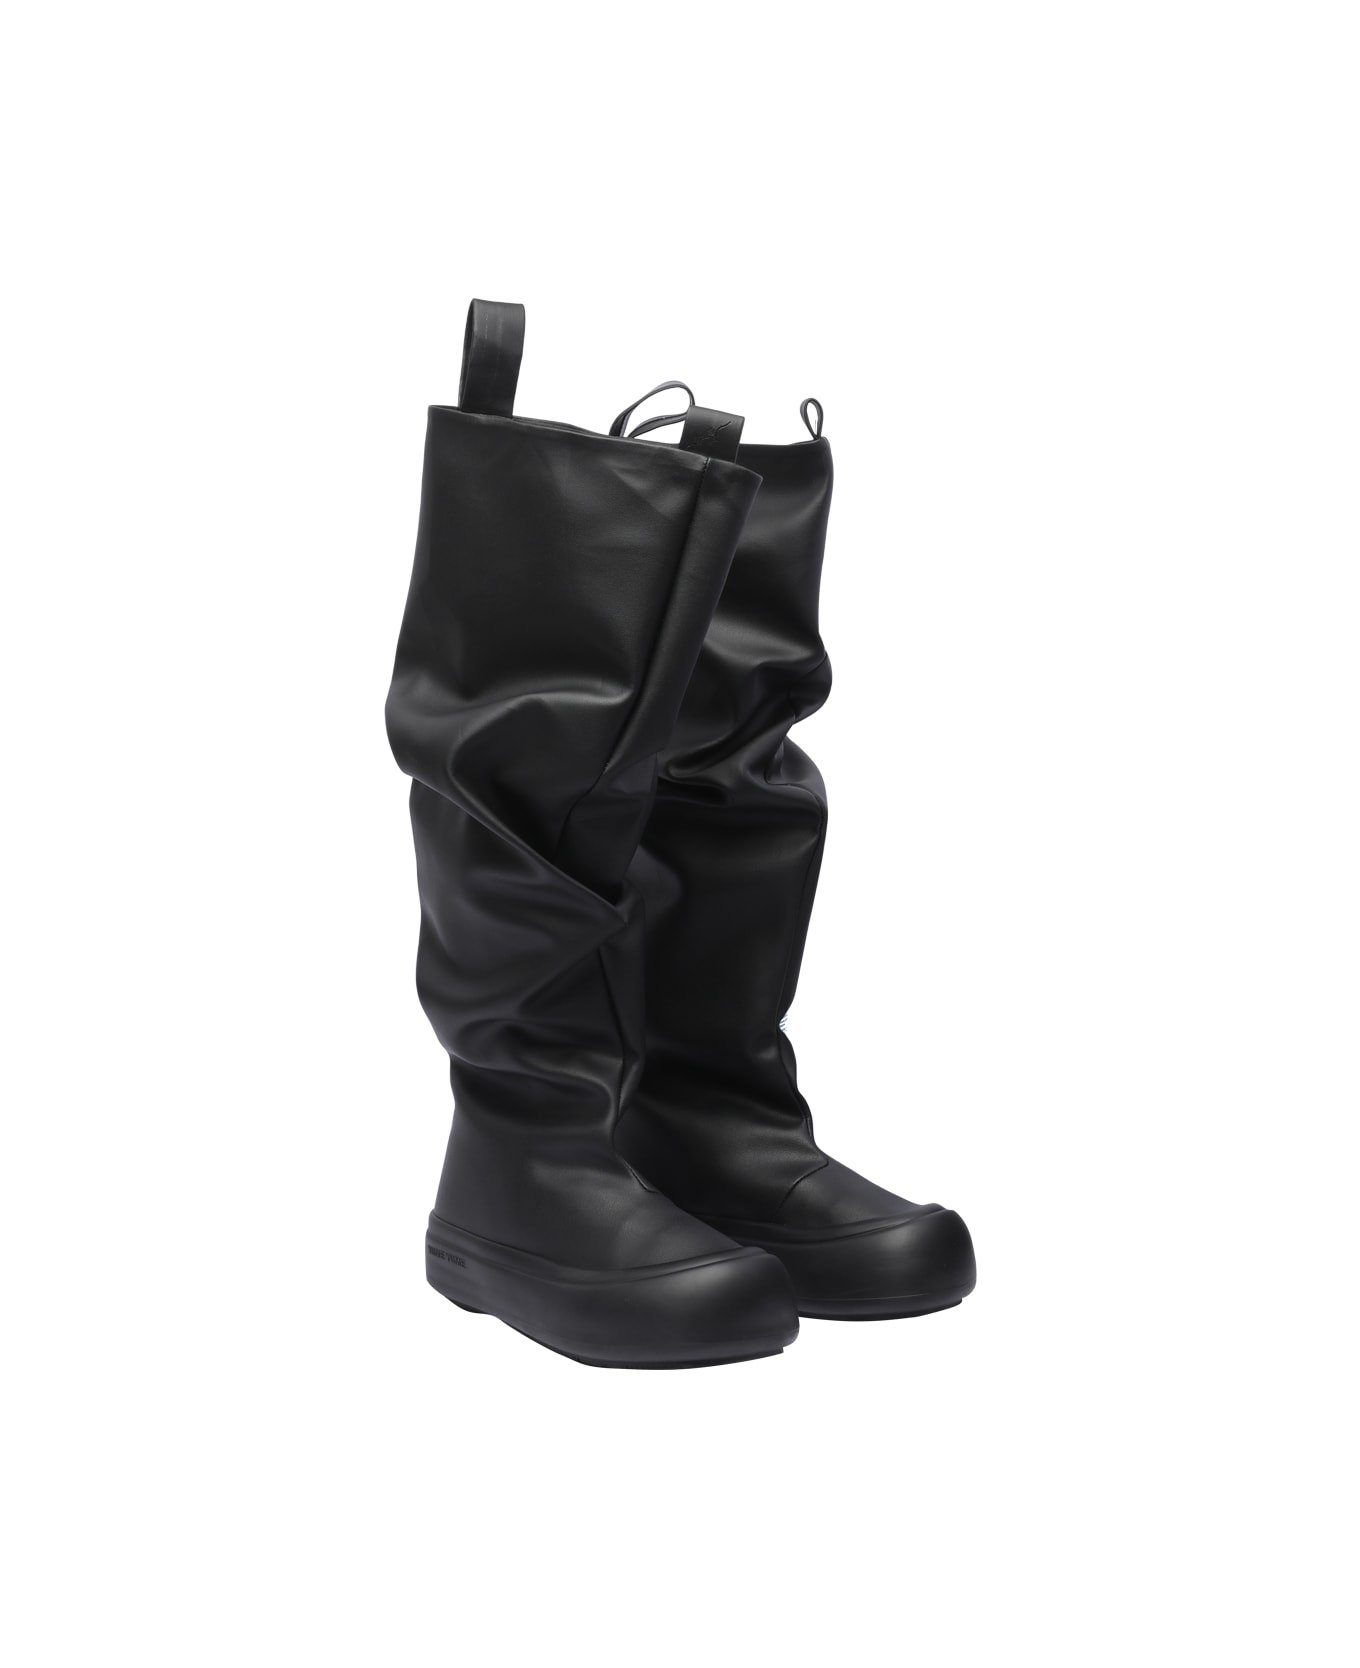 YUME YUME Fisherman Boots - Black ブーツ